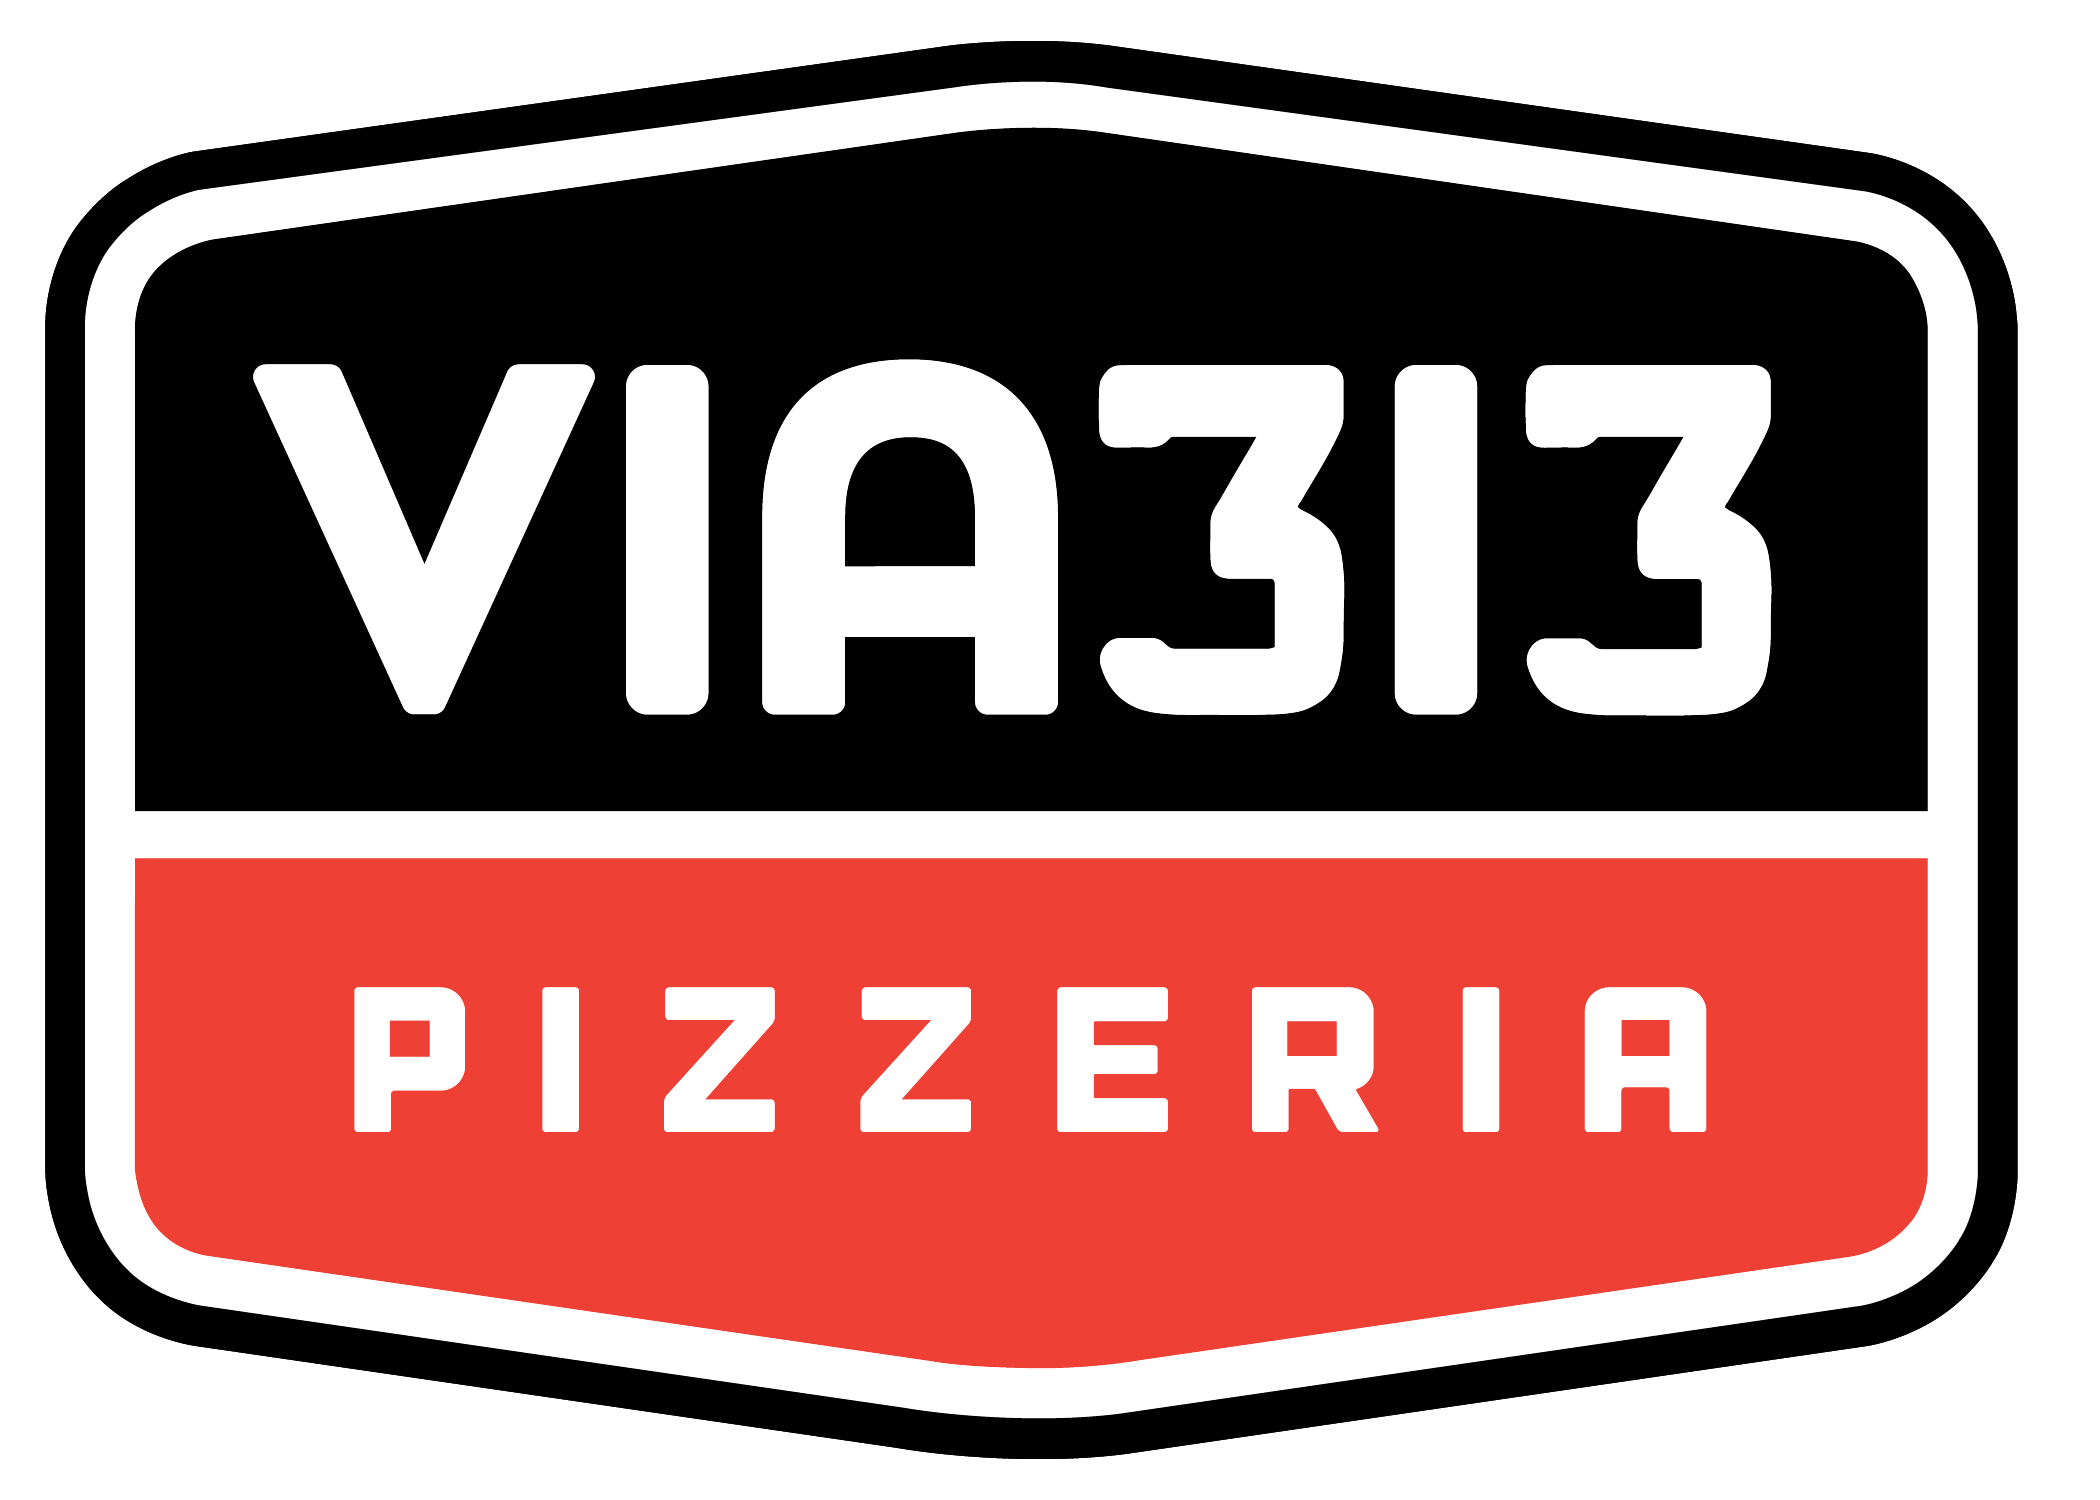 VIA 313 – Genuine Detroit Style Pizza